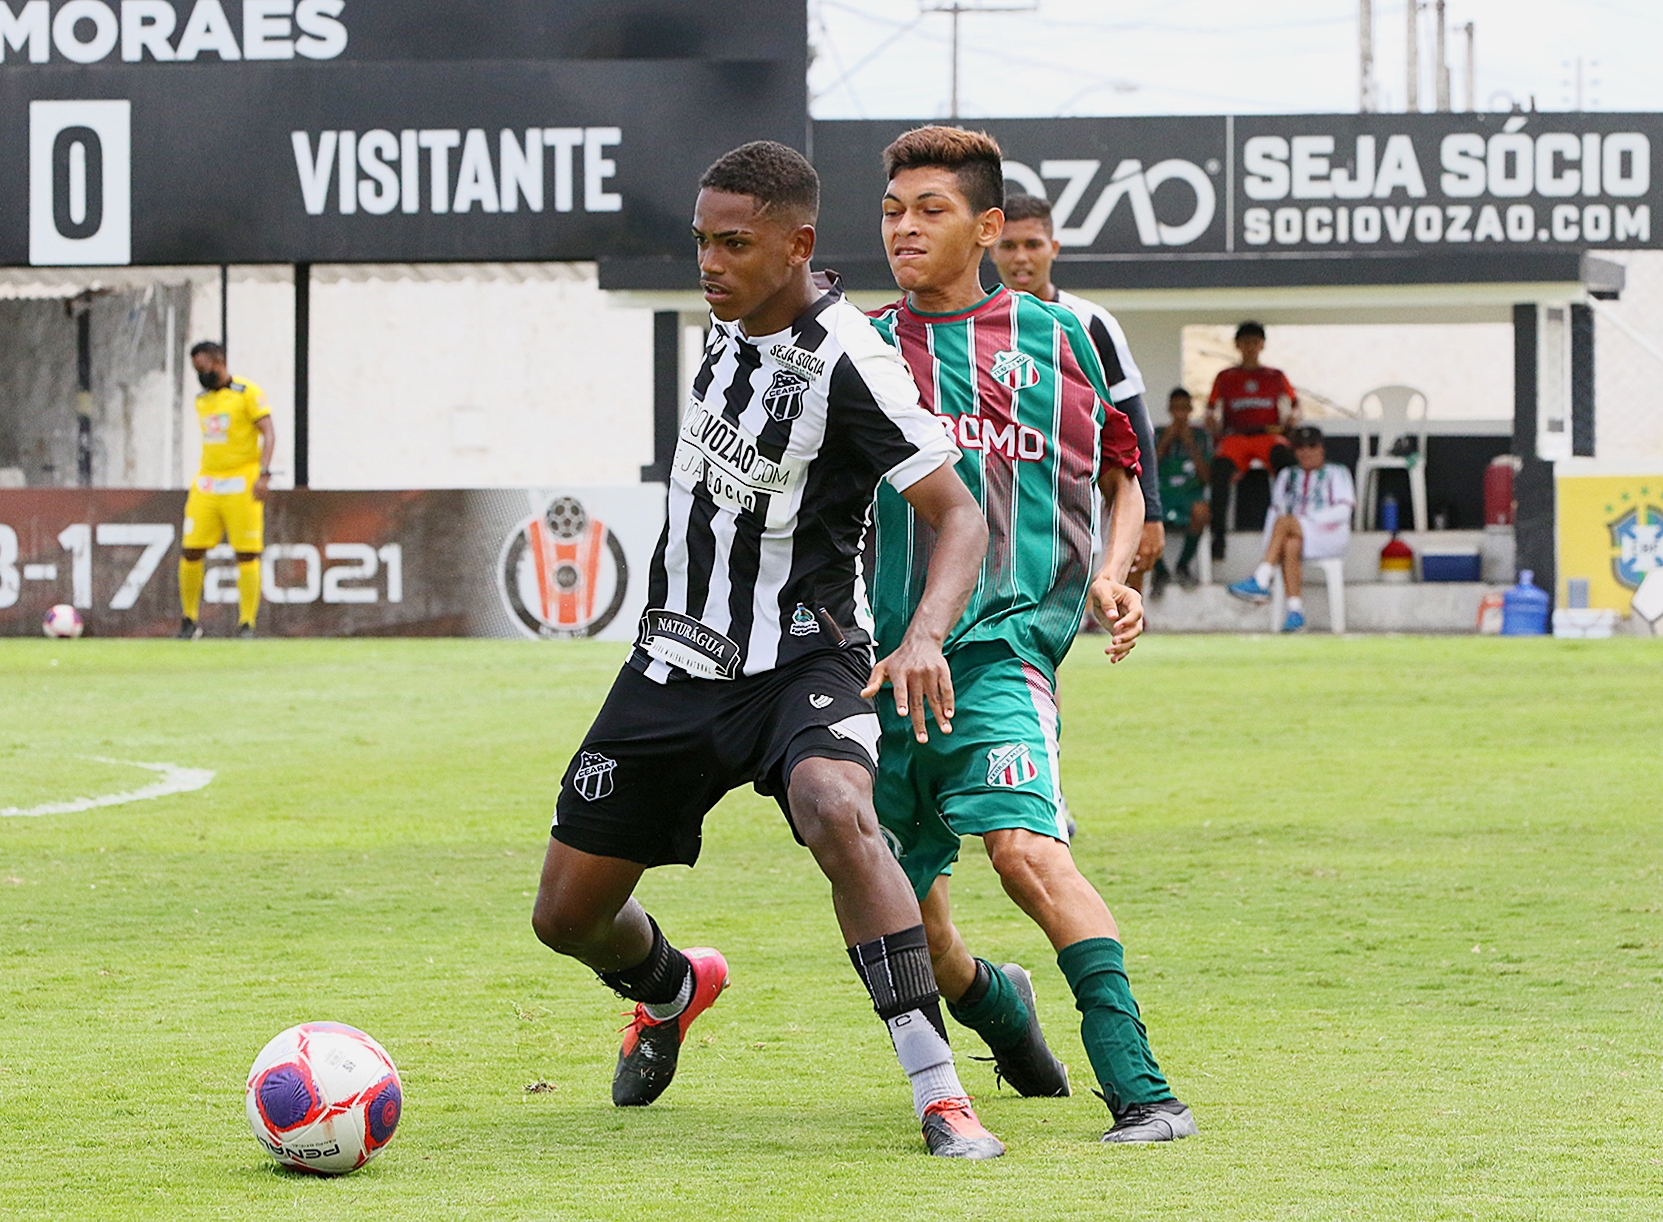 Ceará vence o Juazeiro na ida da semifinal do Cearense Sub-17